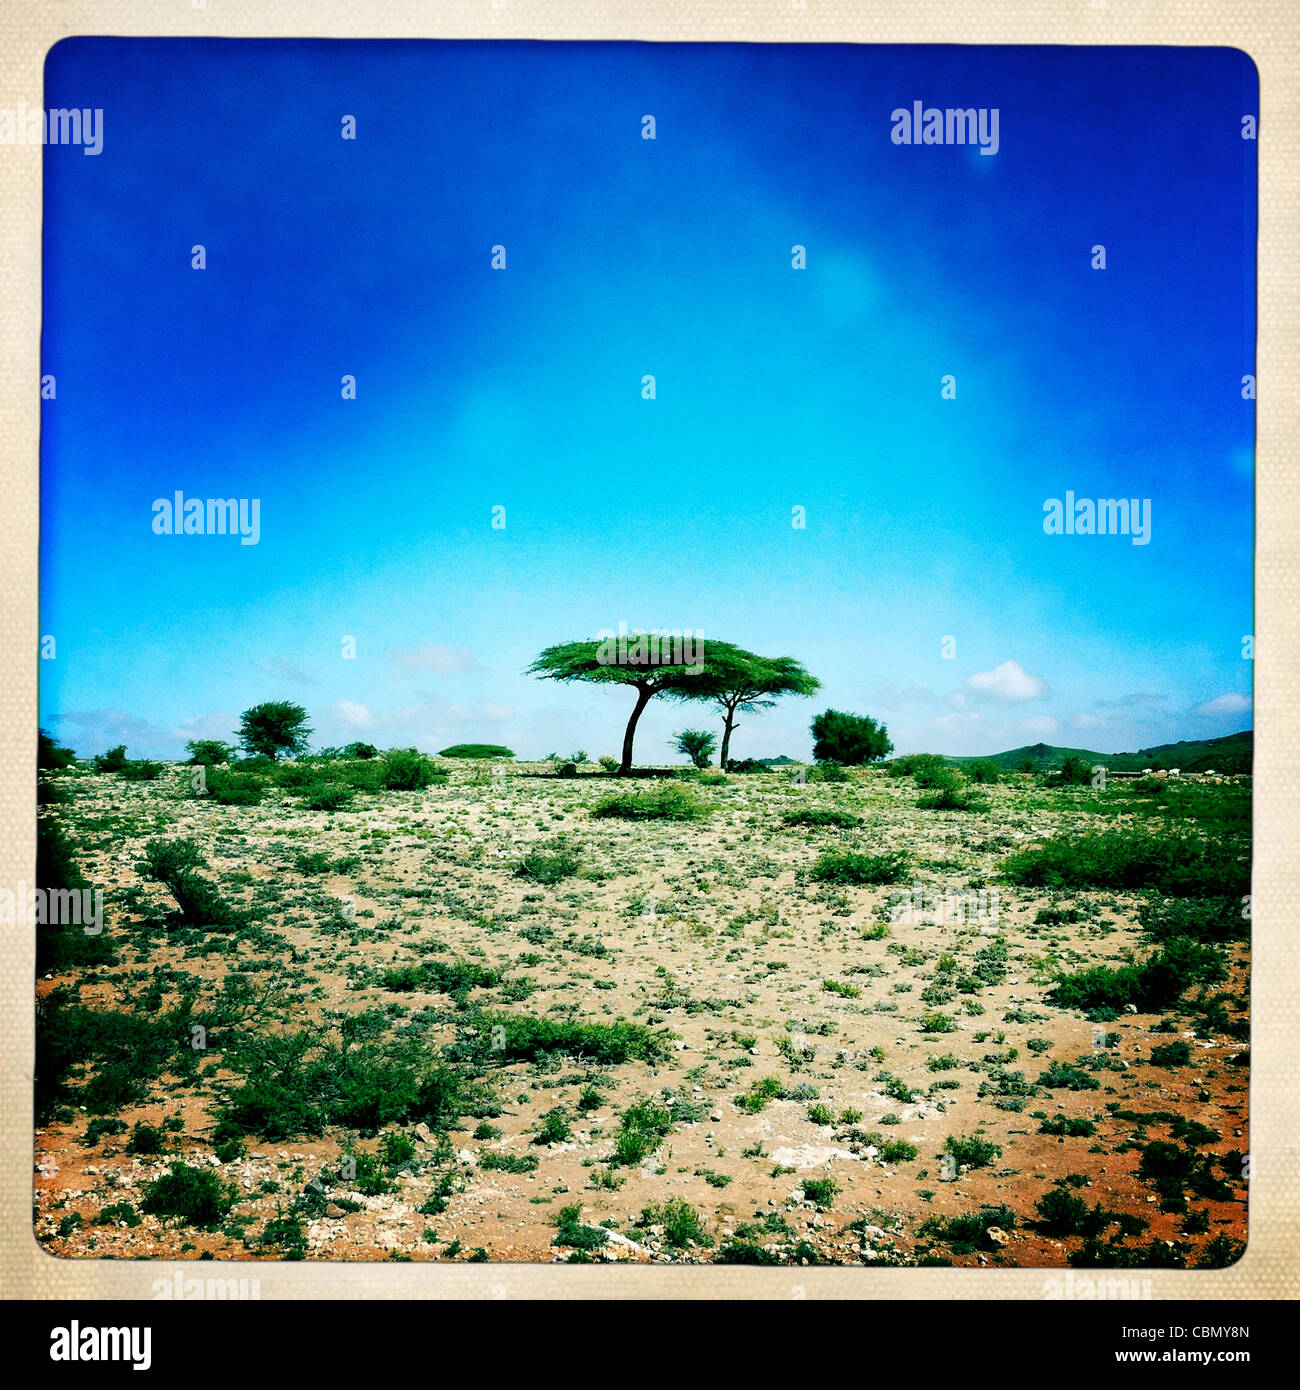 Albero solitario in arido paesaggio El Sheikh Somaliland Foto Stock